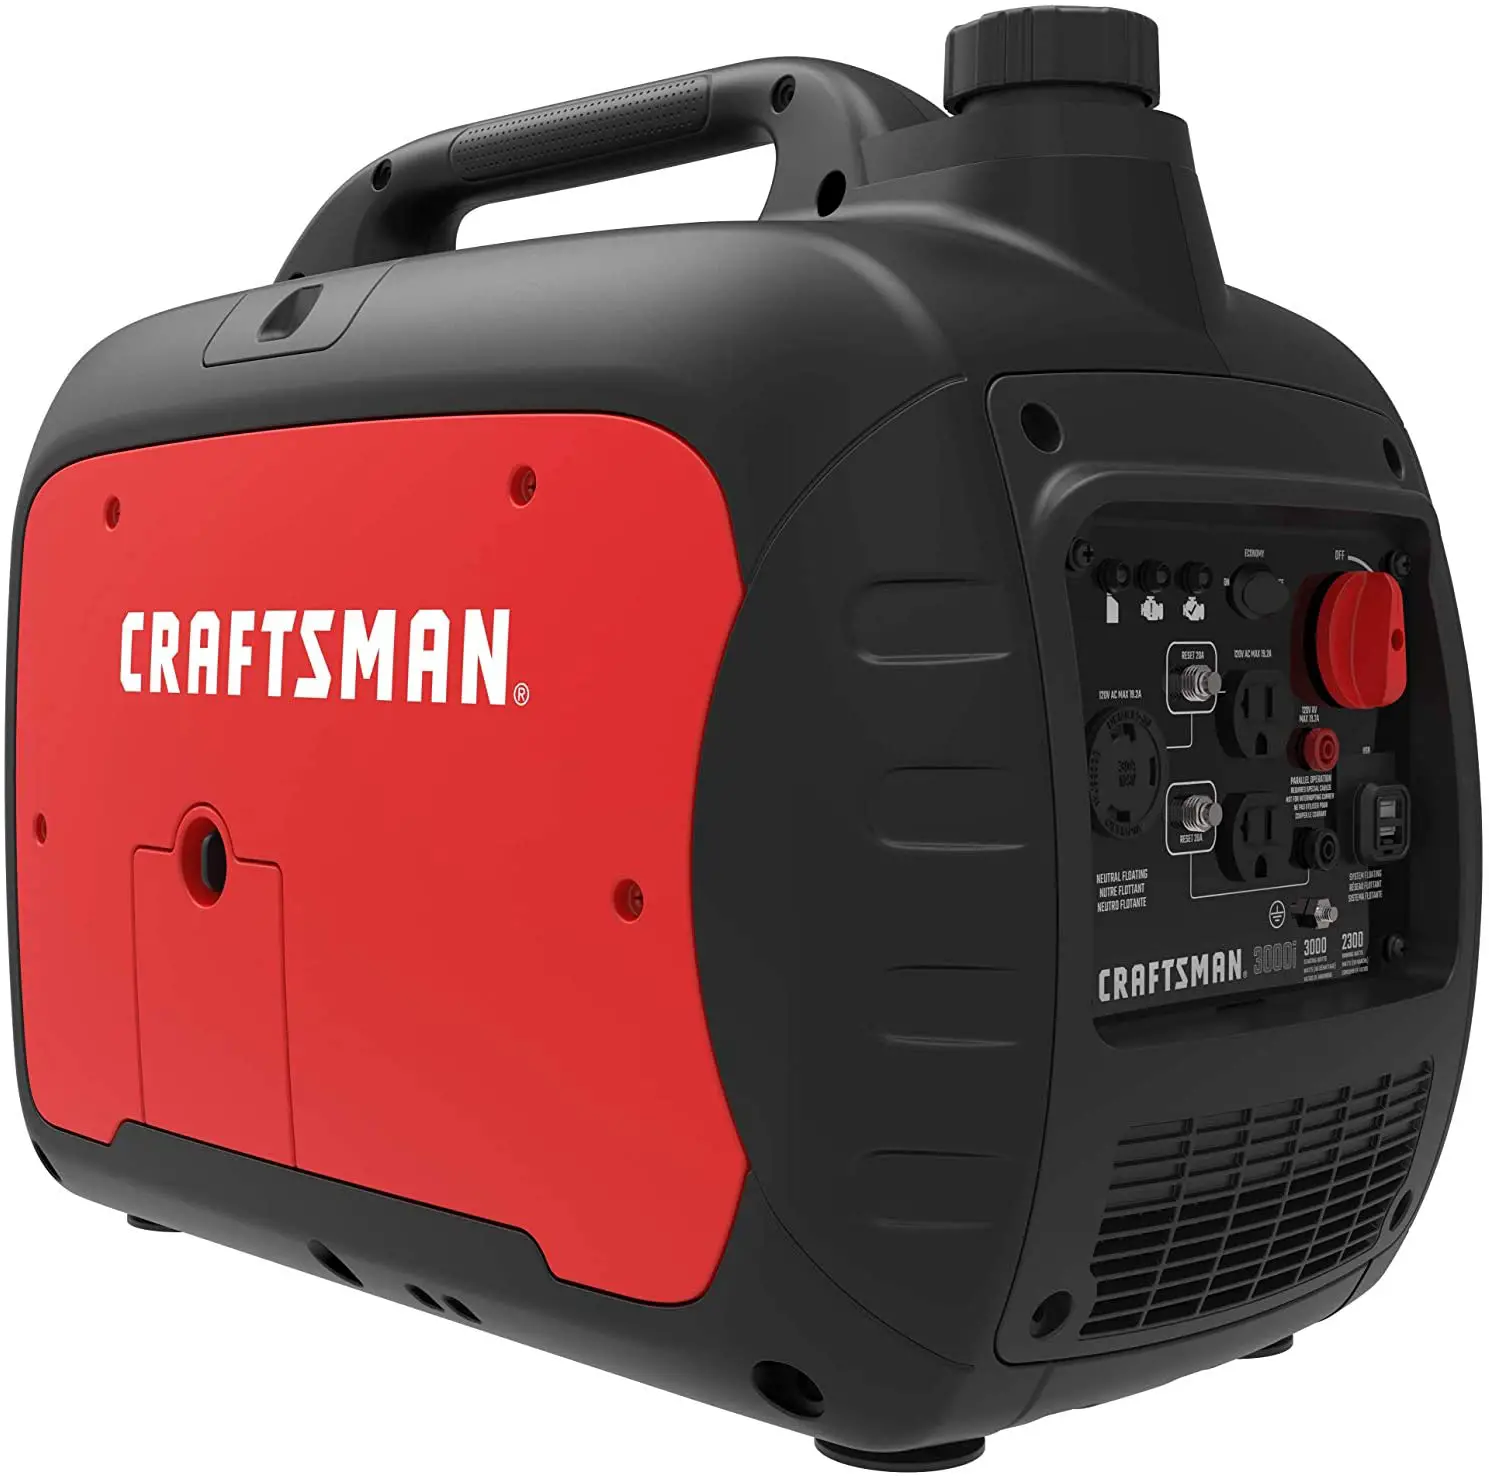 Craftsman 3000i Inverter Generator PROS and CONS